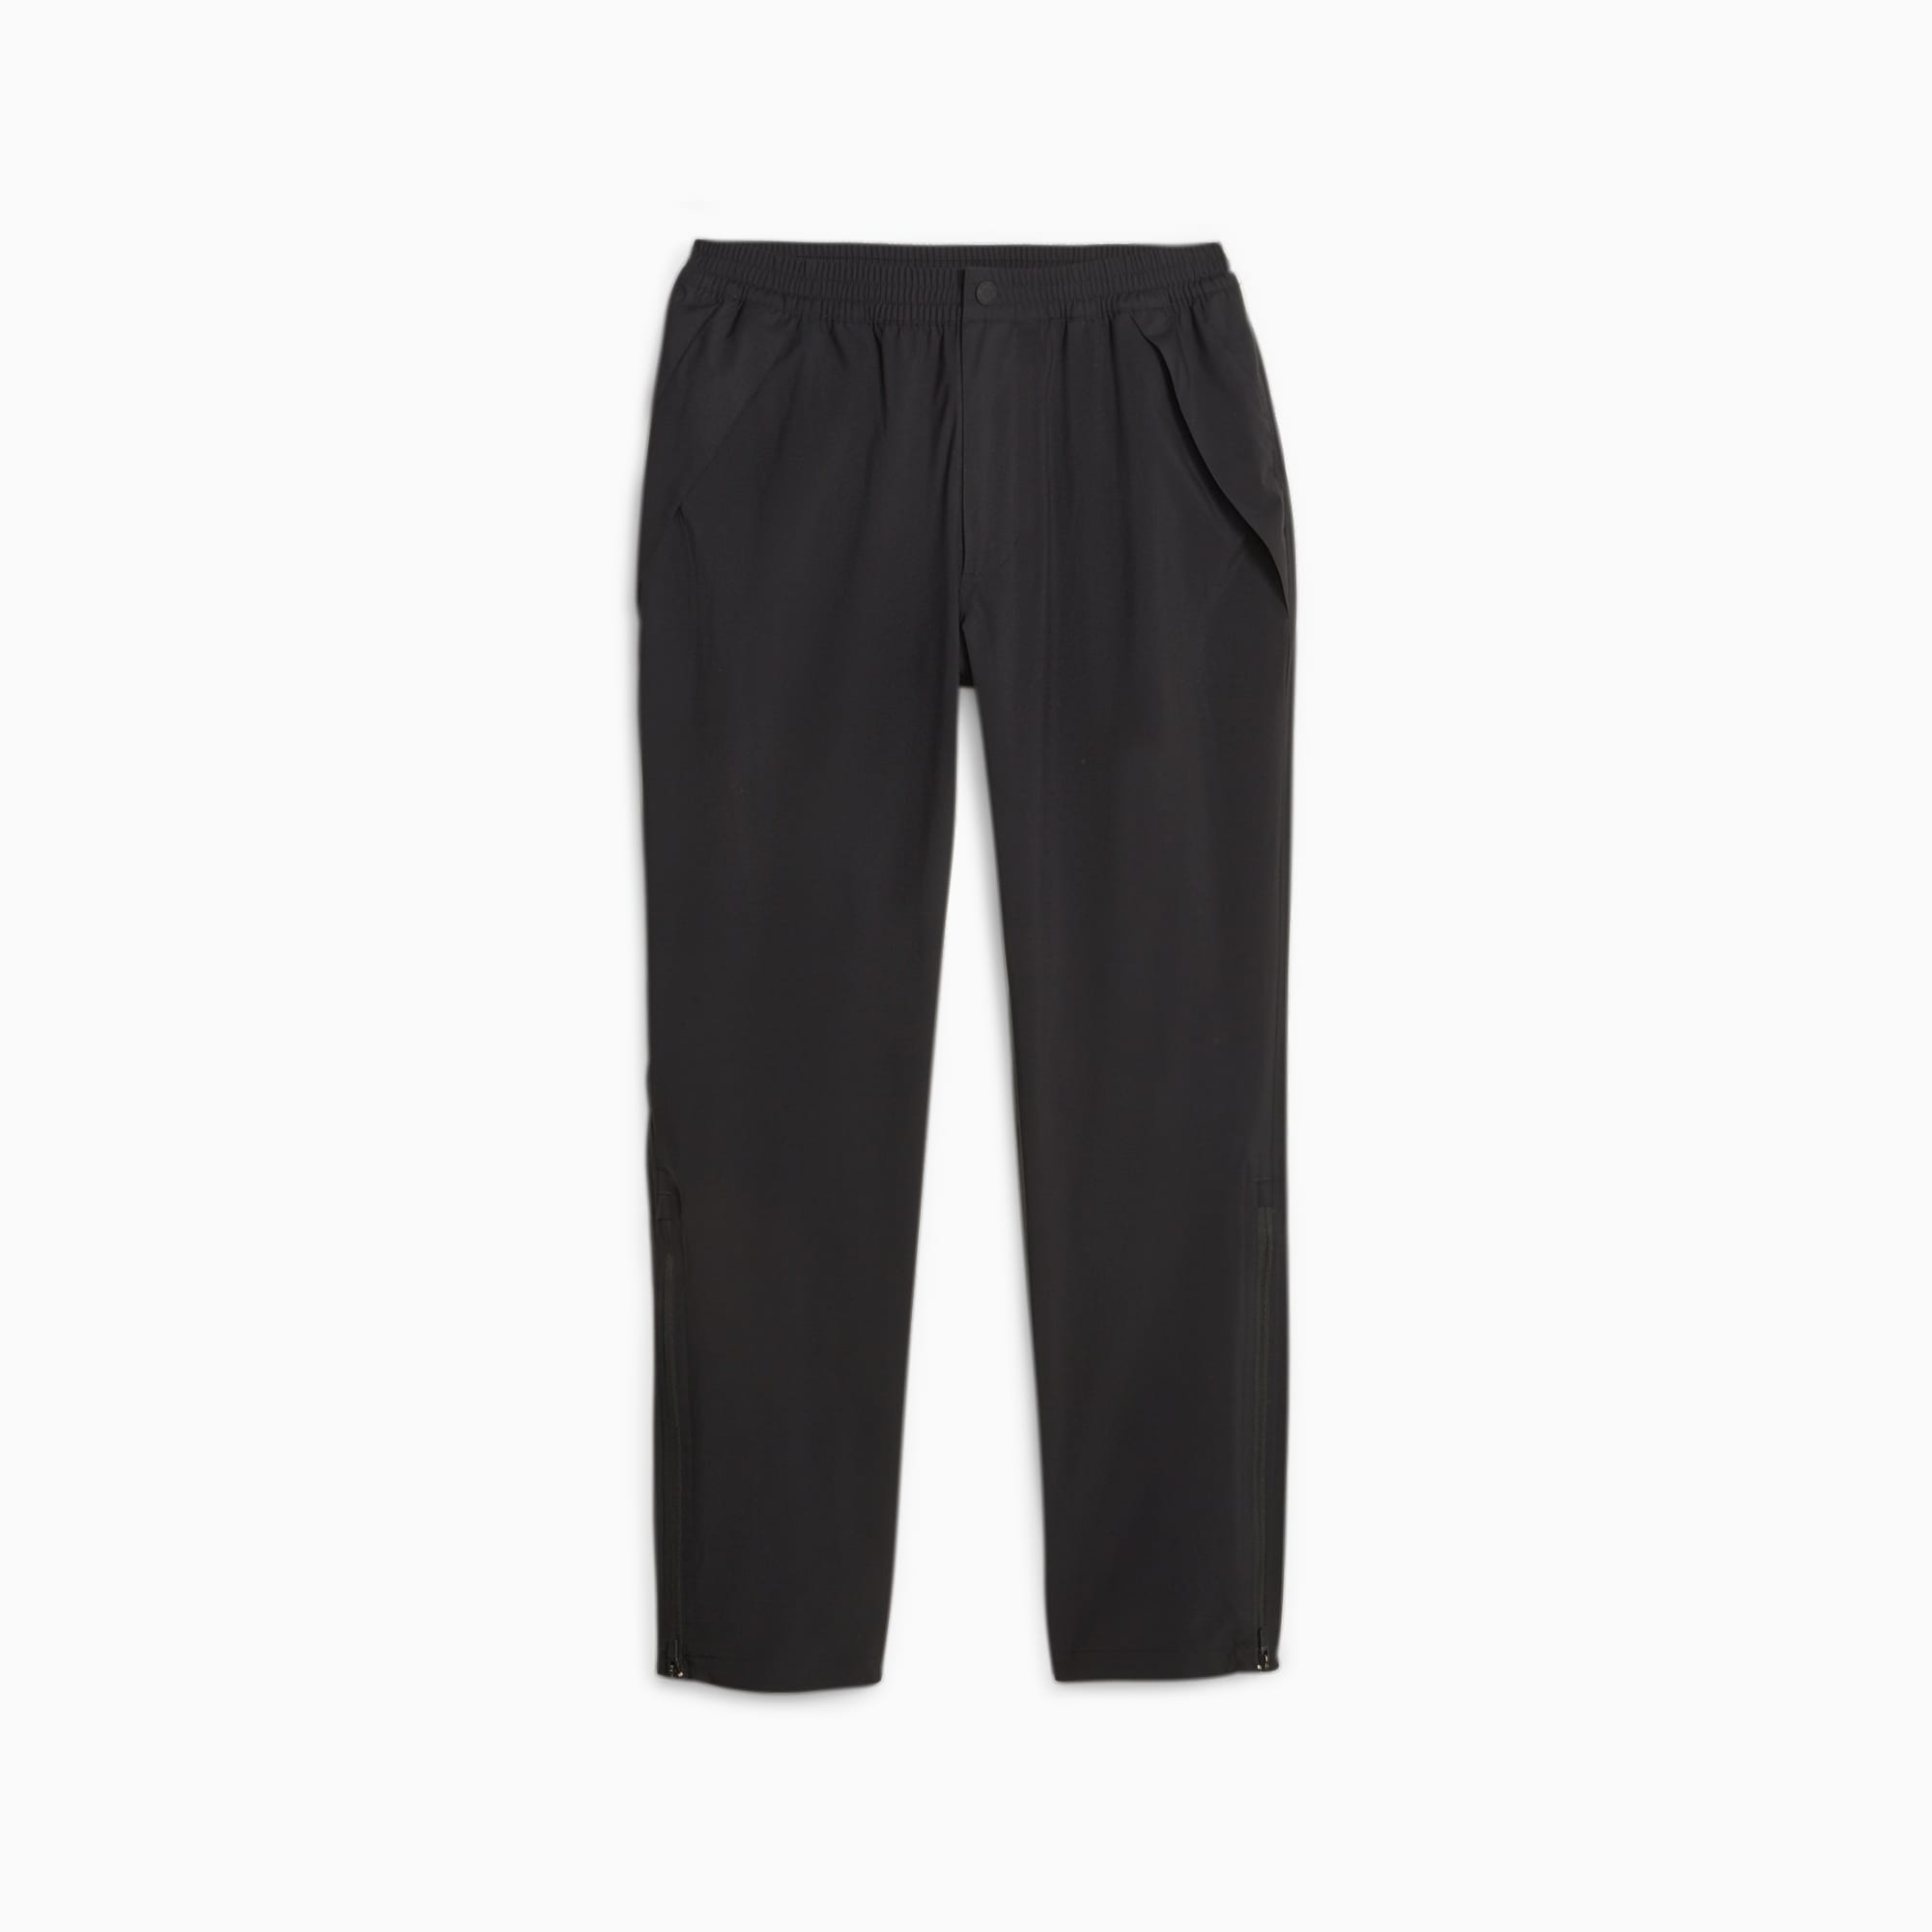 PUMA Drylbl Men's Rain Pants, Black, Size M/S, Clothing